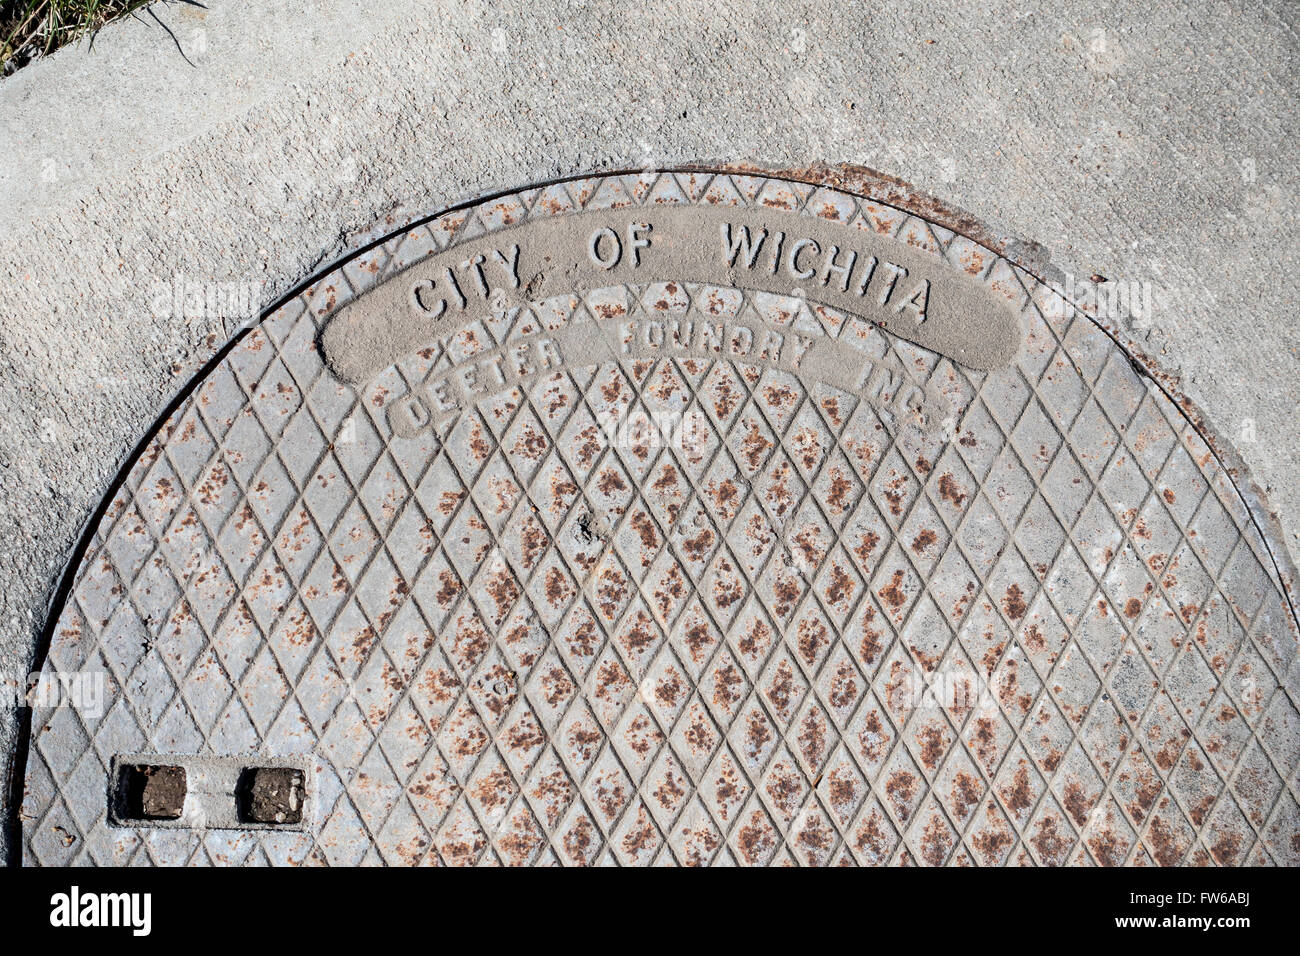 A manhole cover in an urban neighborhood in Wichita, Kansas, USA. Stock Photo